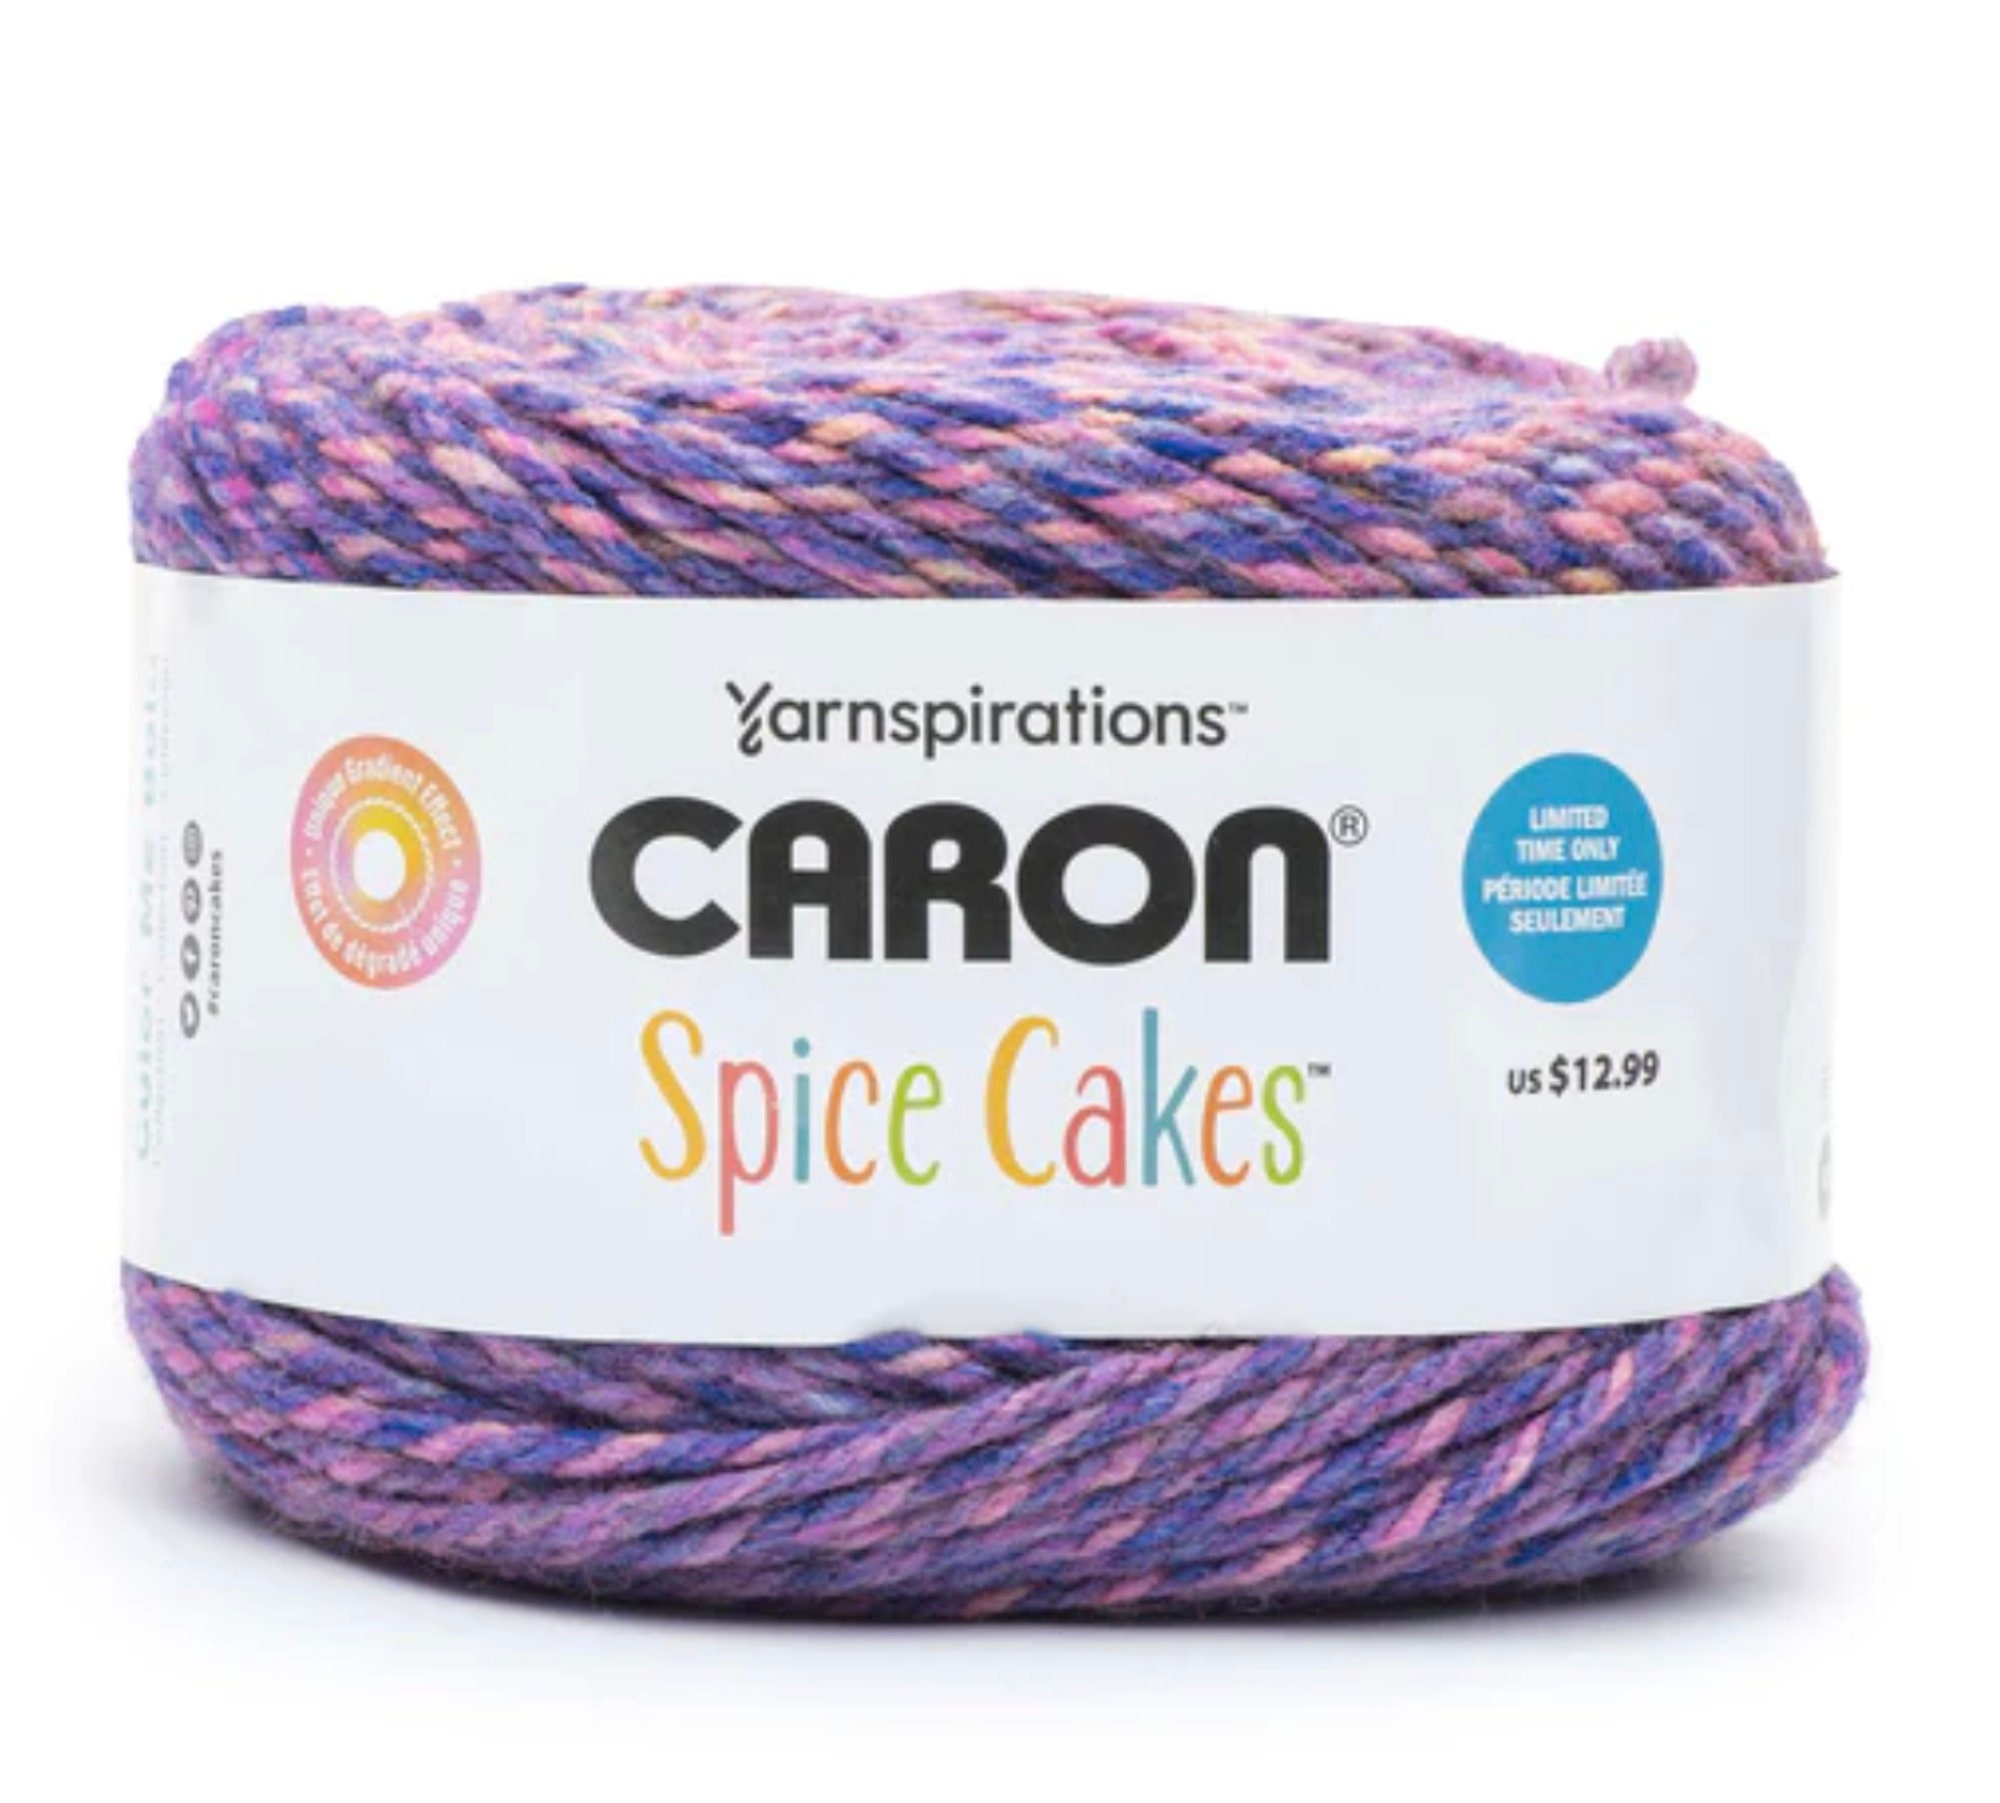 Caron Cakes 200g/383yds/350m Medium 4 Yarn spice Cake 